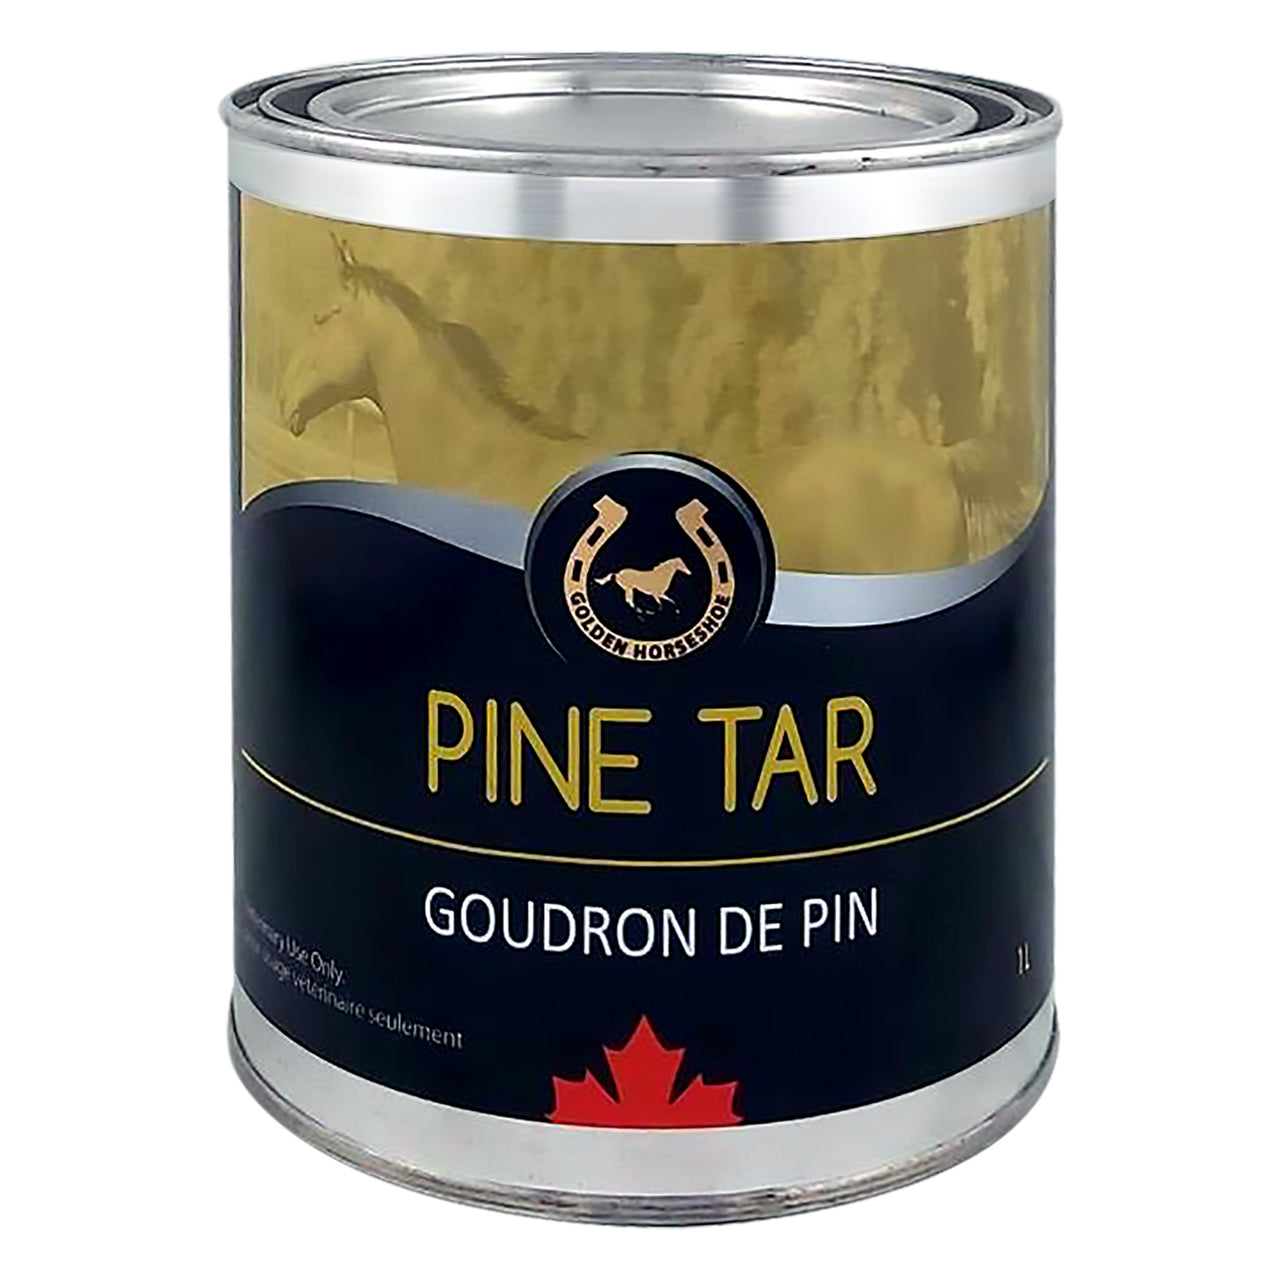 Golden Shoehorse Pine Tar